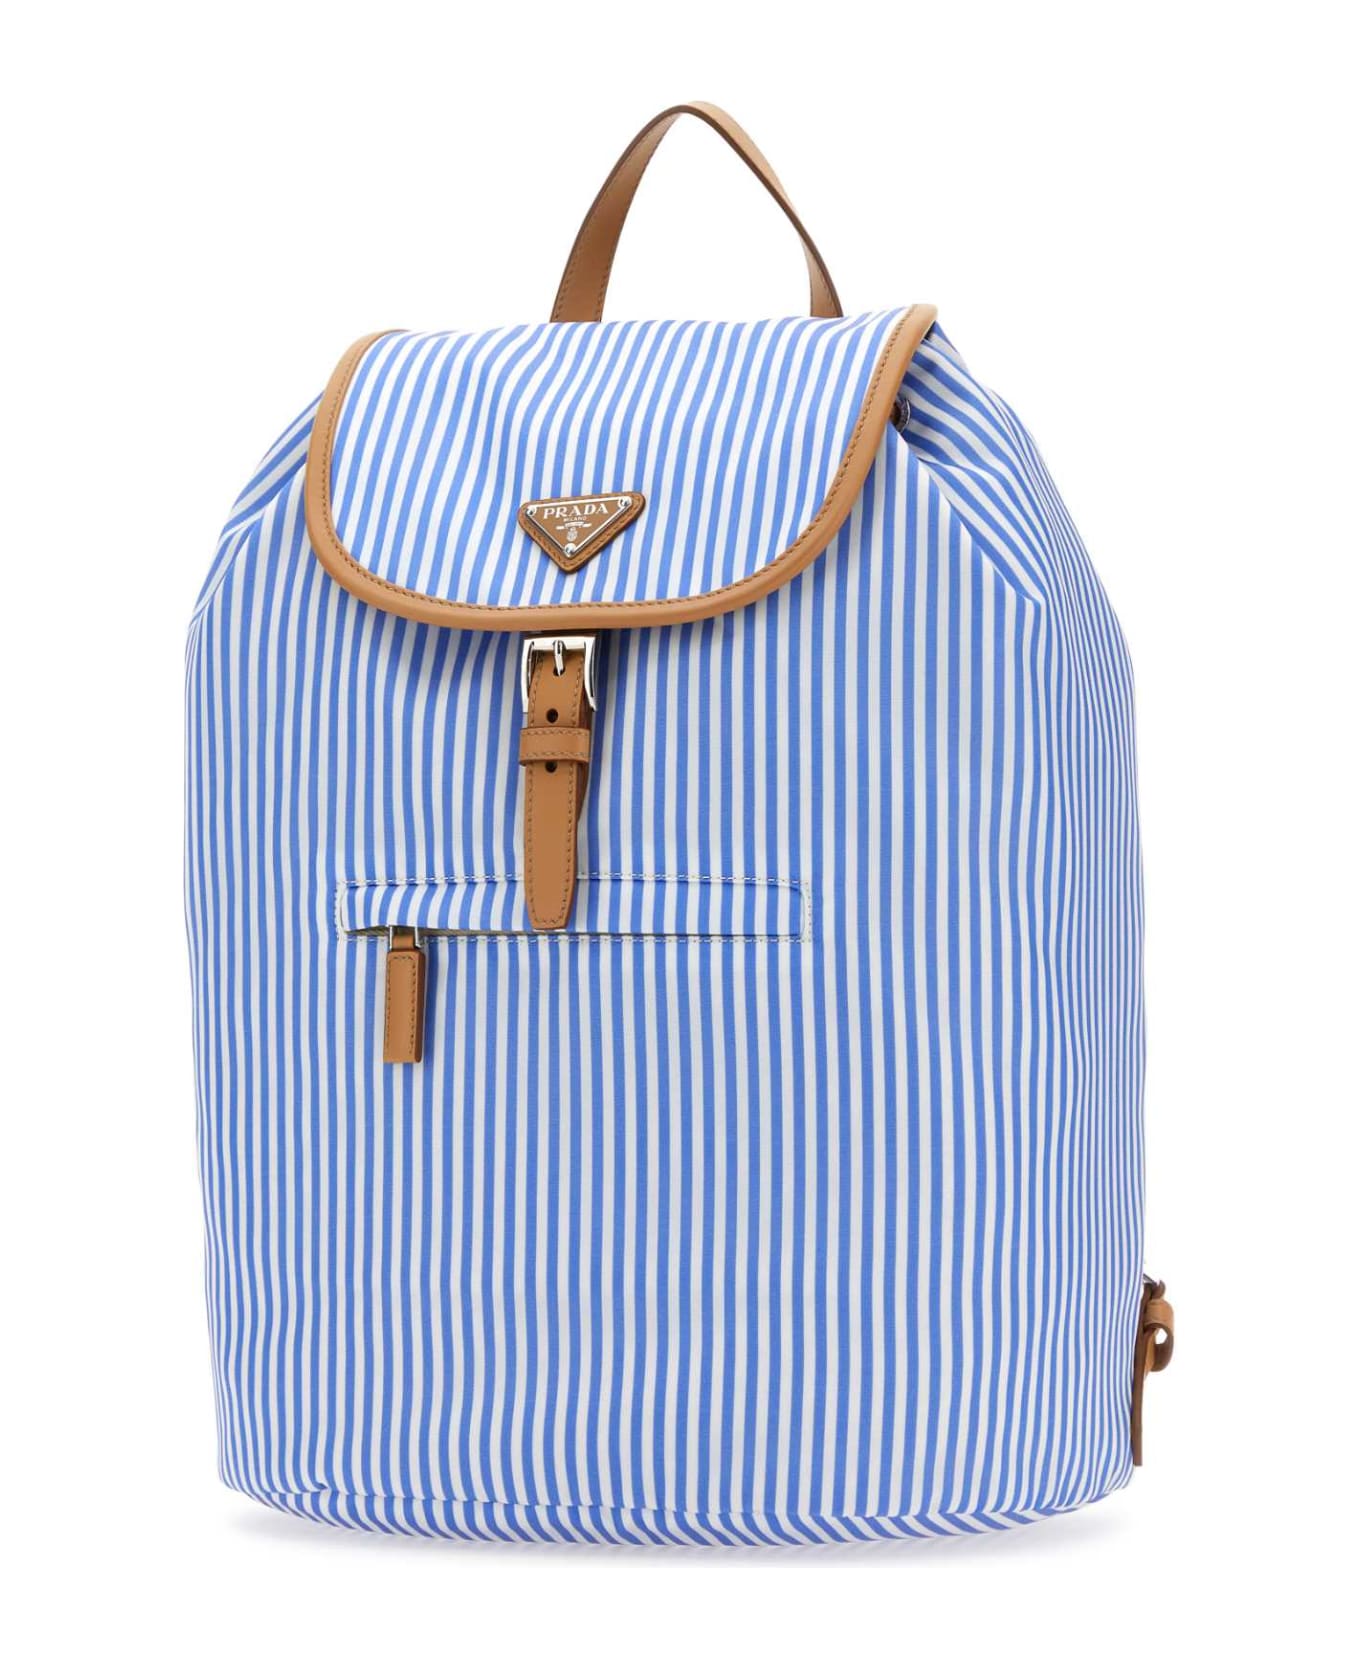 Prada Printed Re-nylon Backpack - CELESTENATURA バックパック